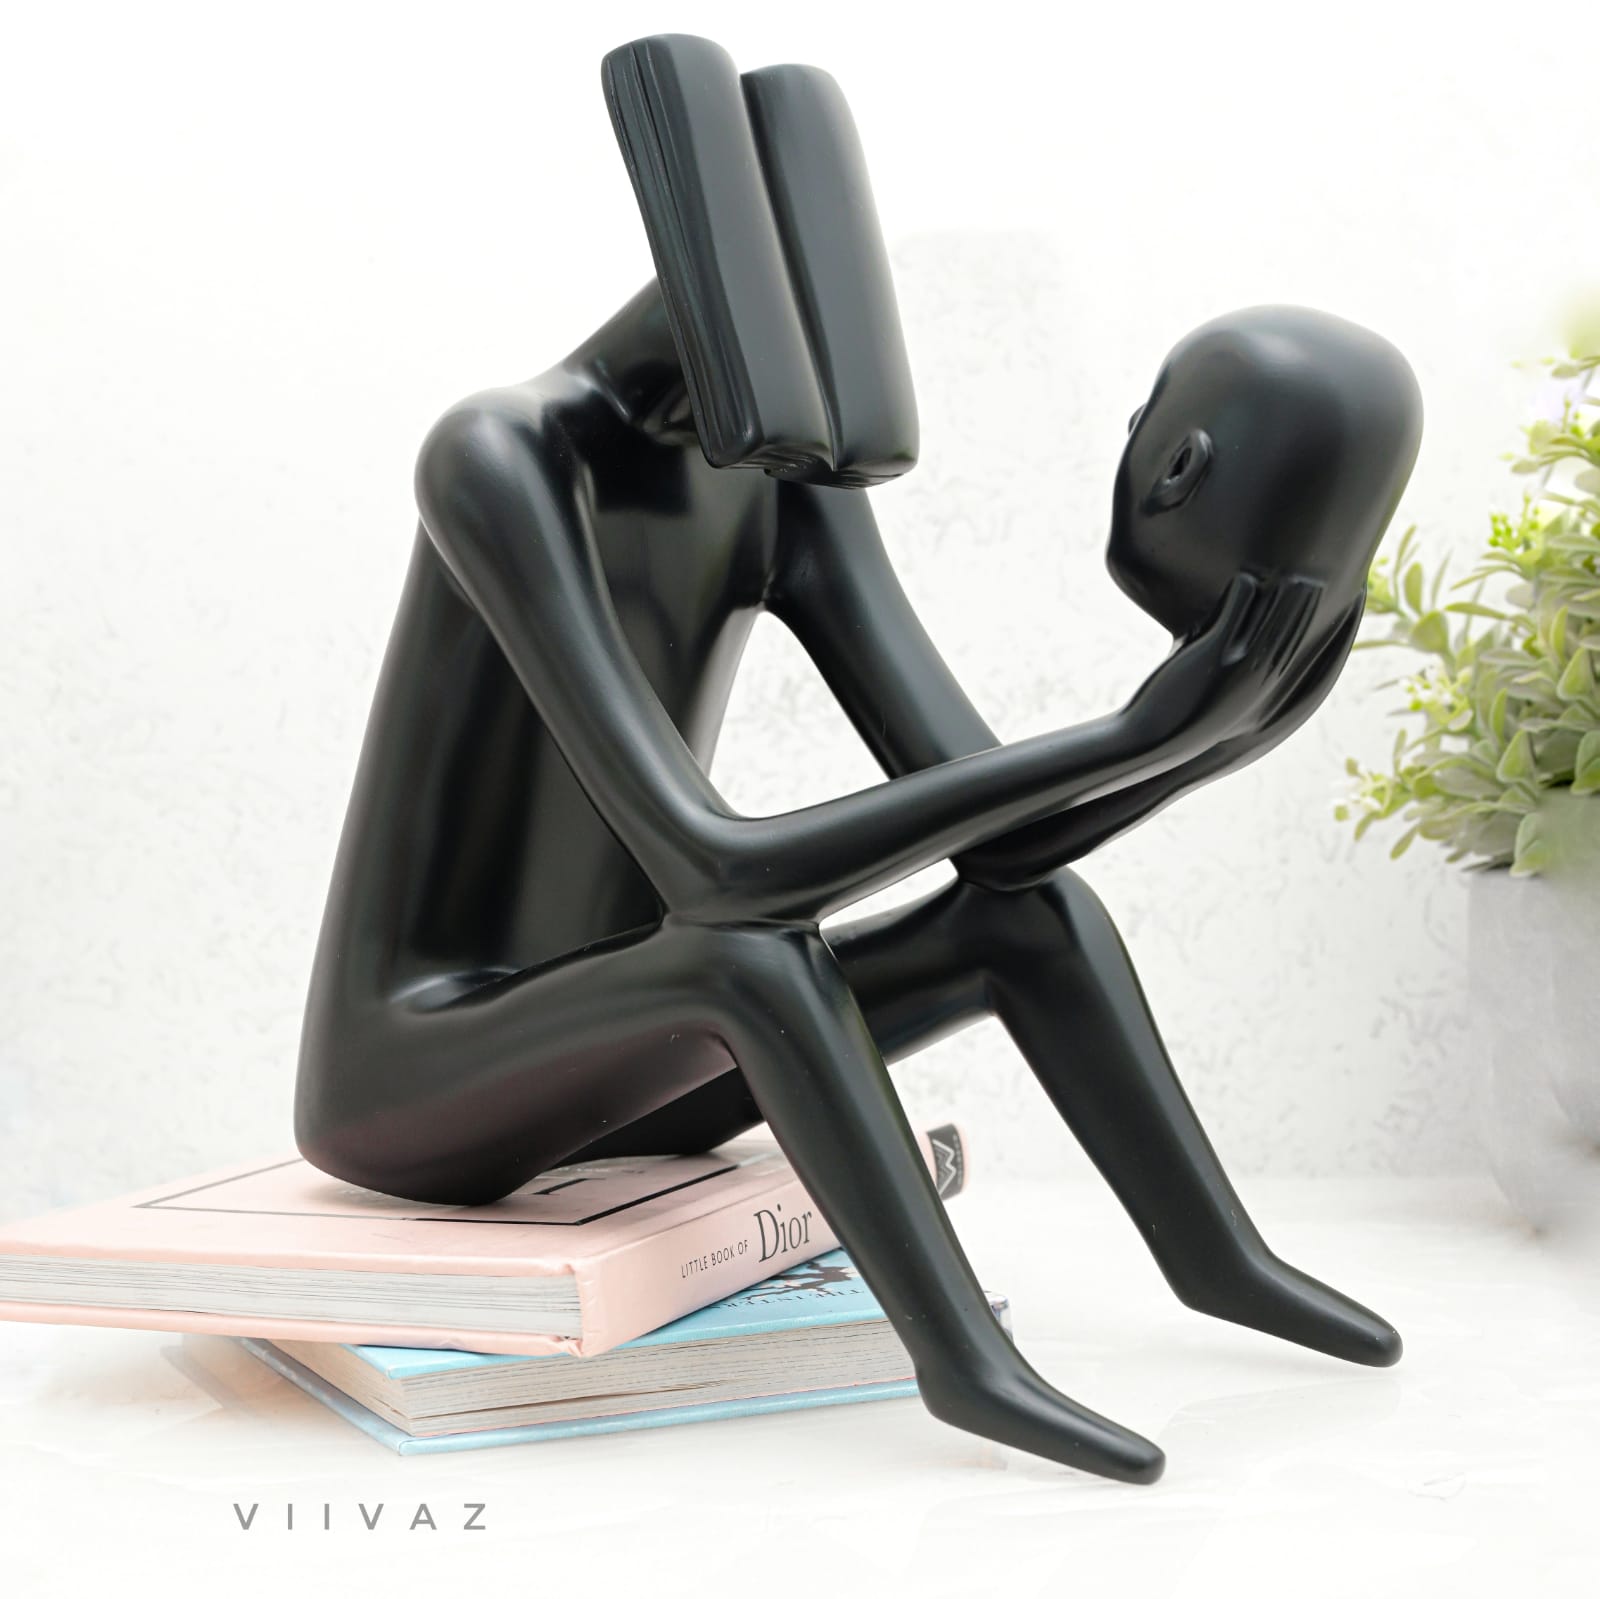 Abstract Man Reading a book sculpture-VIIVAZ